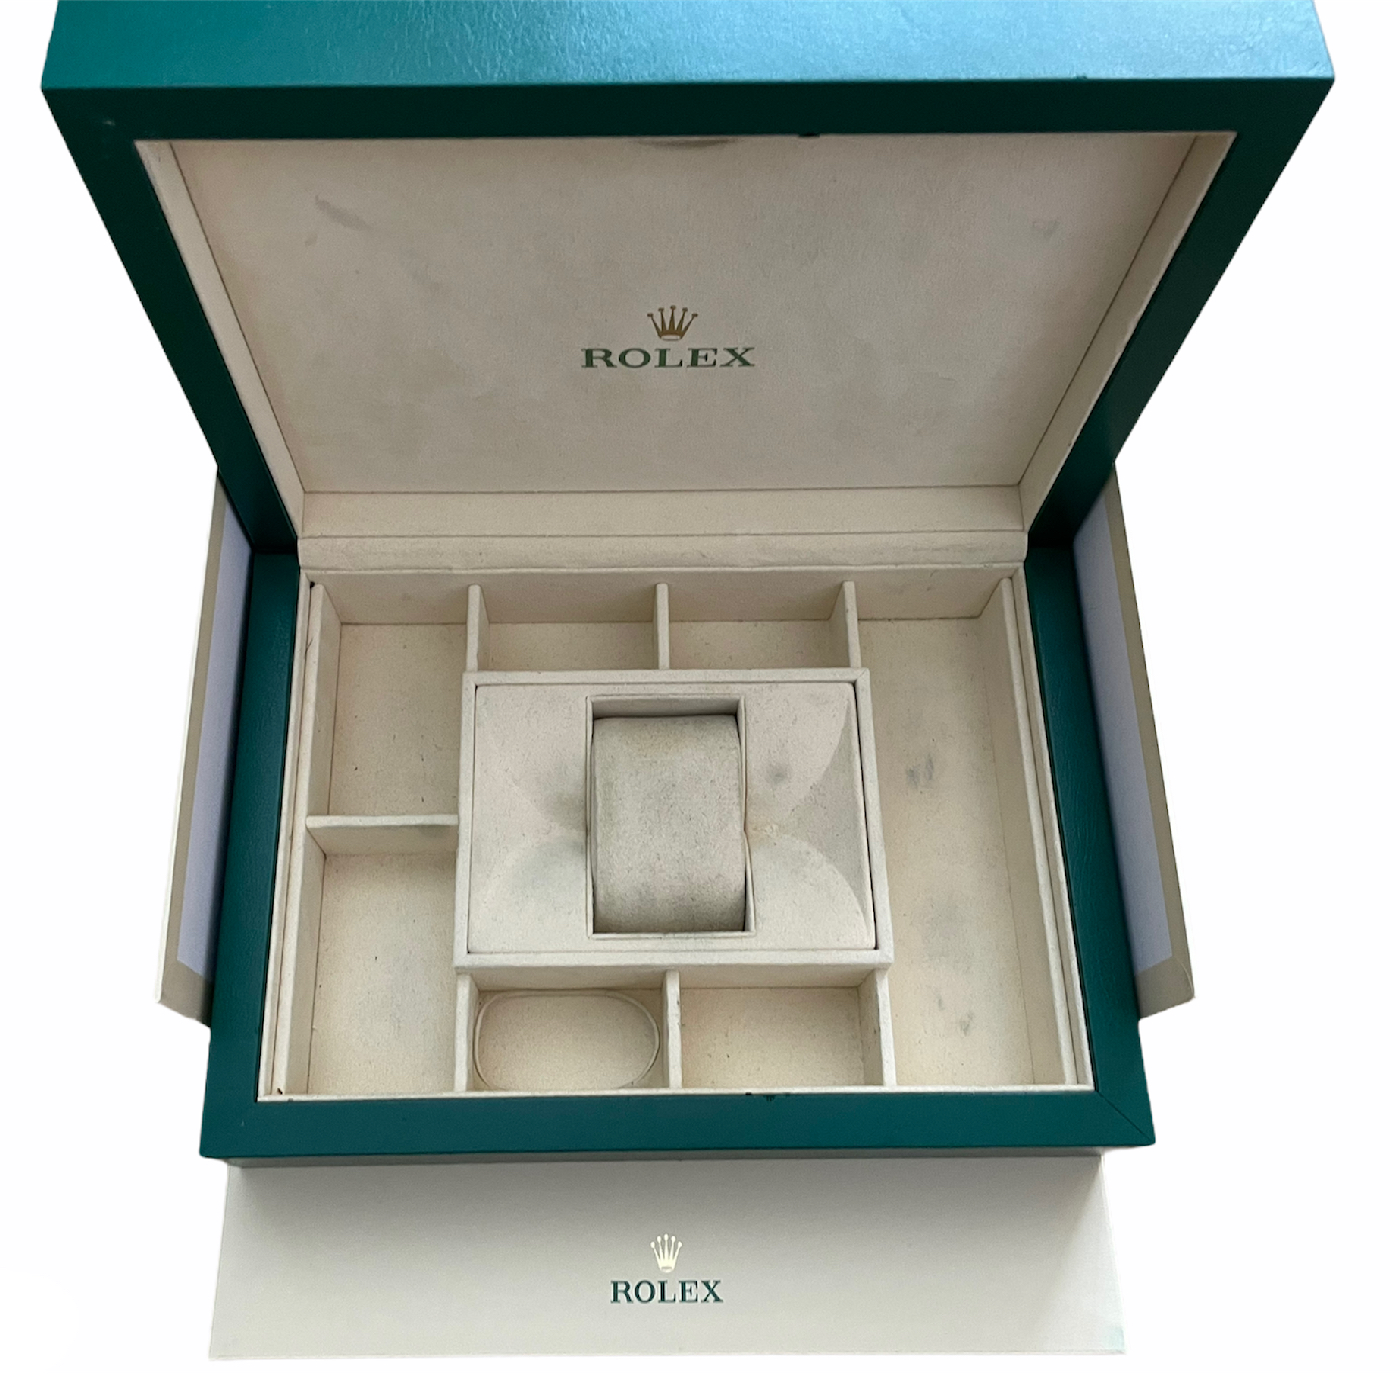 Rolex XL green watch box 39143.71 - 219420